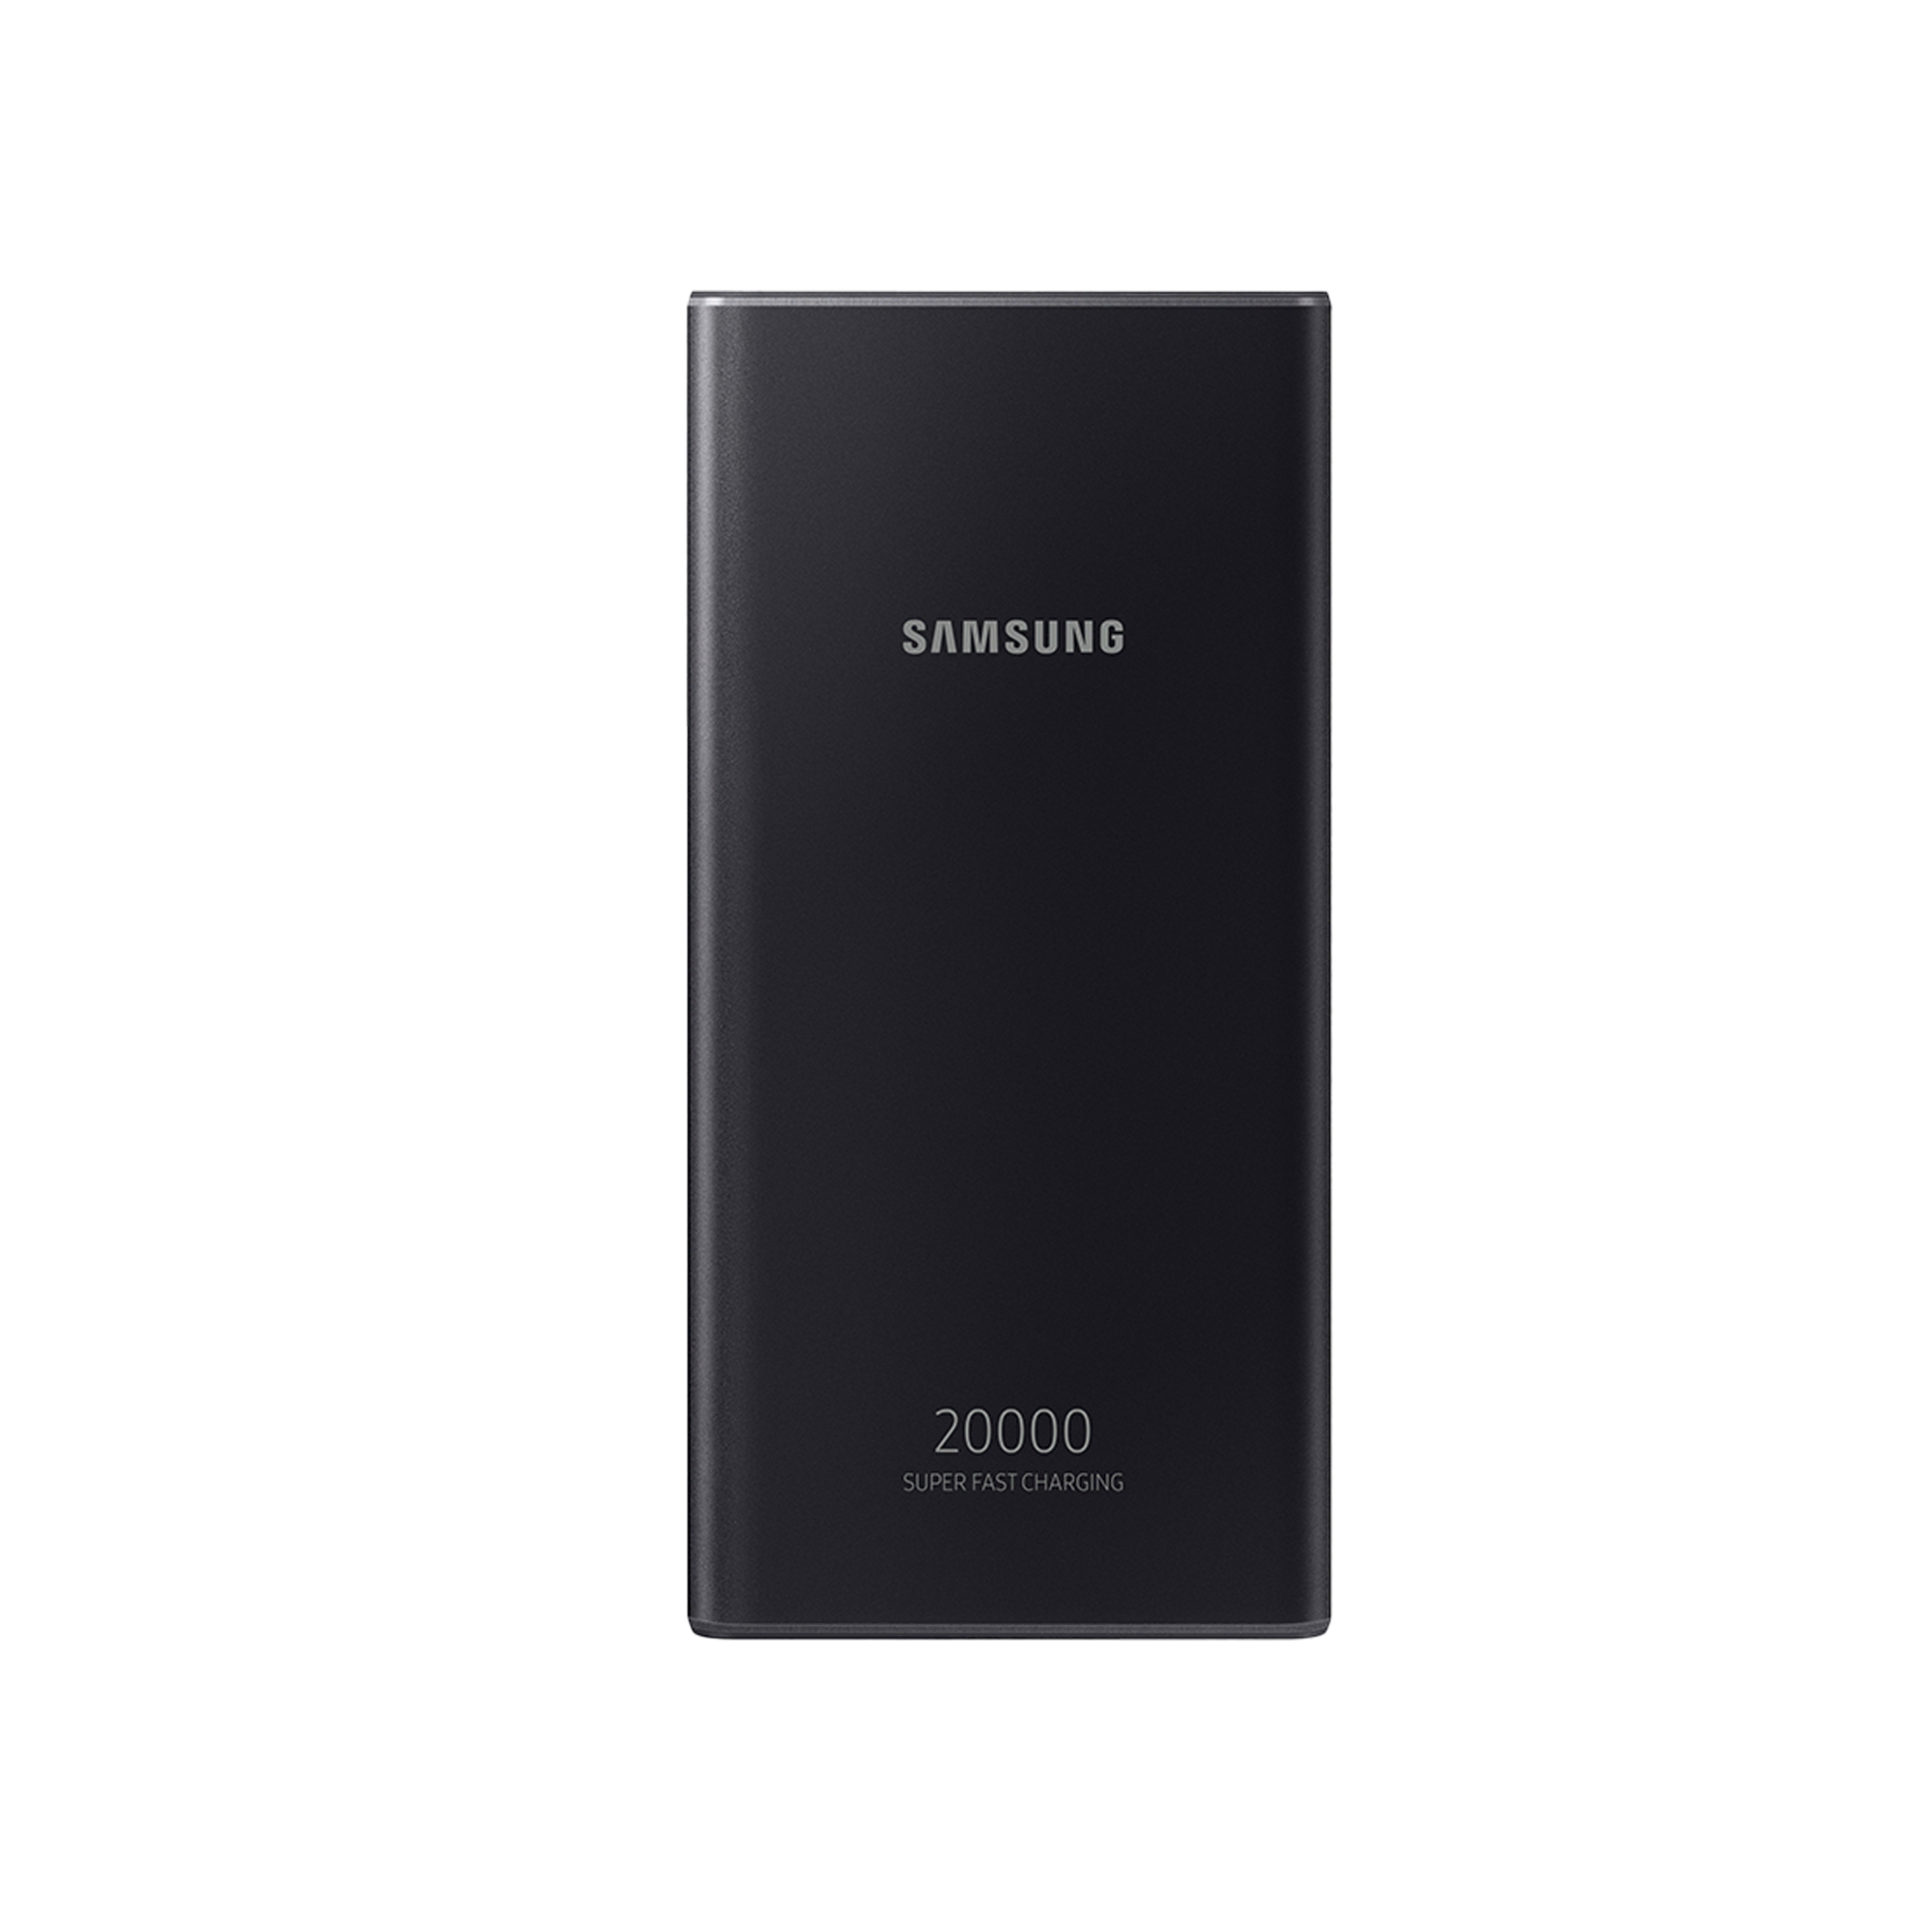 Samsung P5300X 20.000 mAh P.bank CGray Powerbank